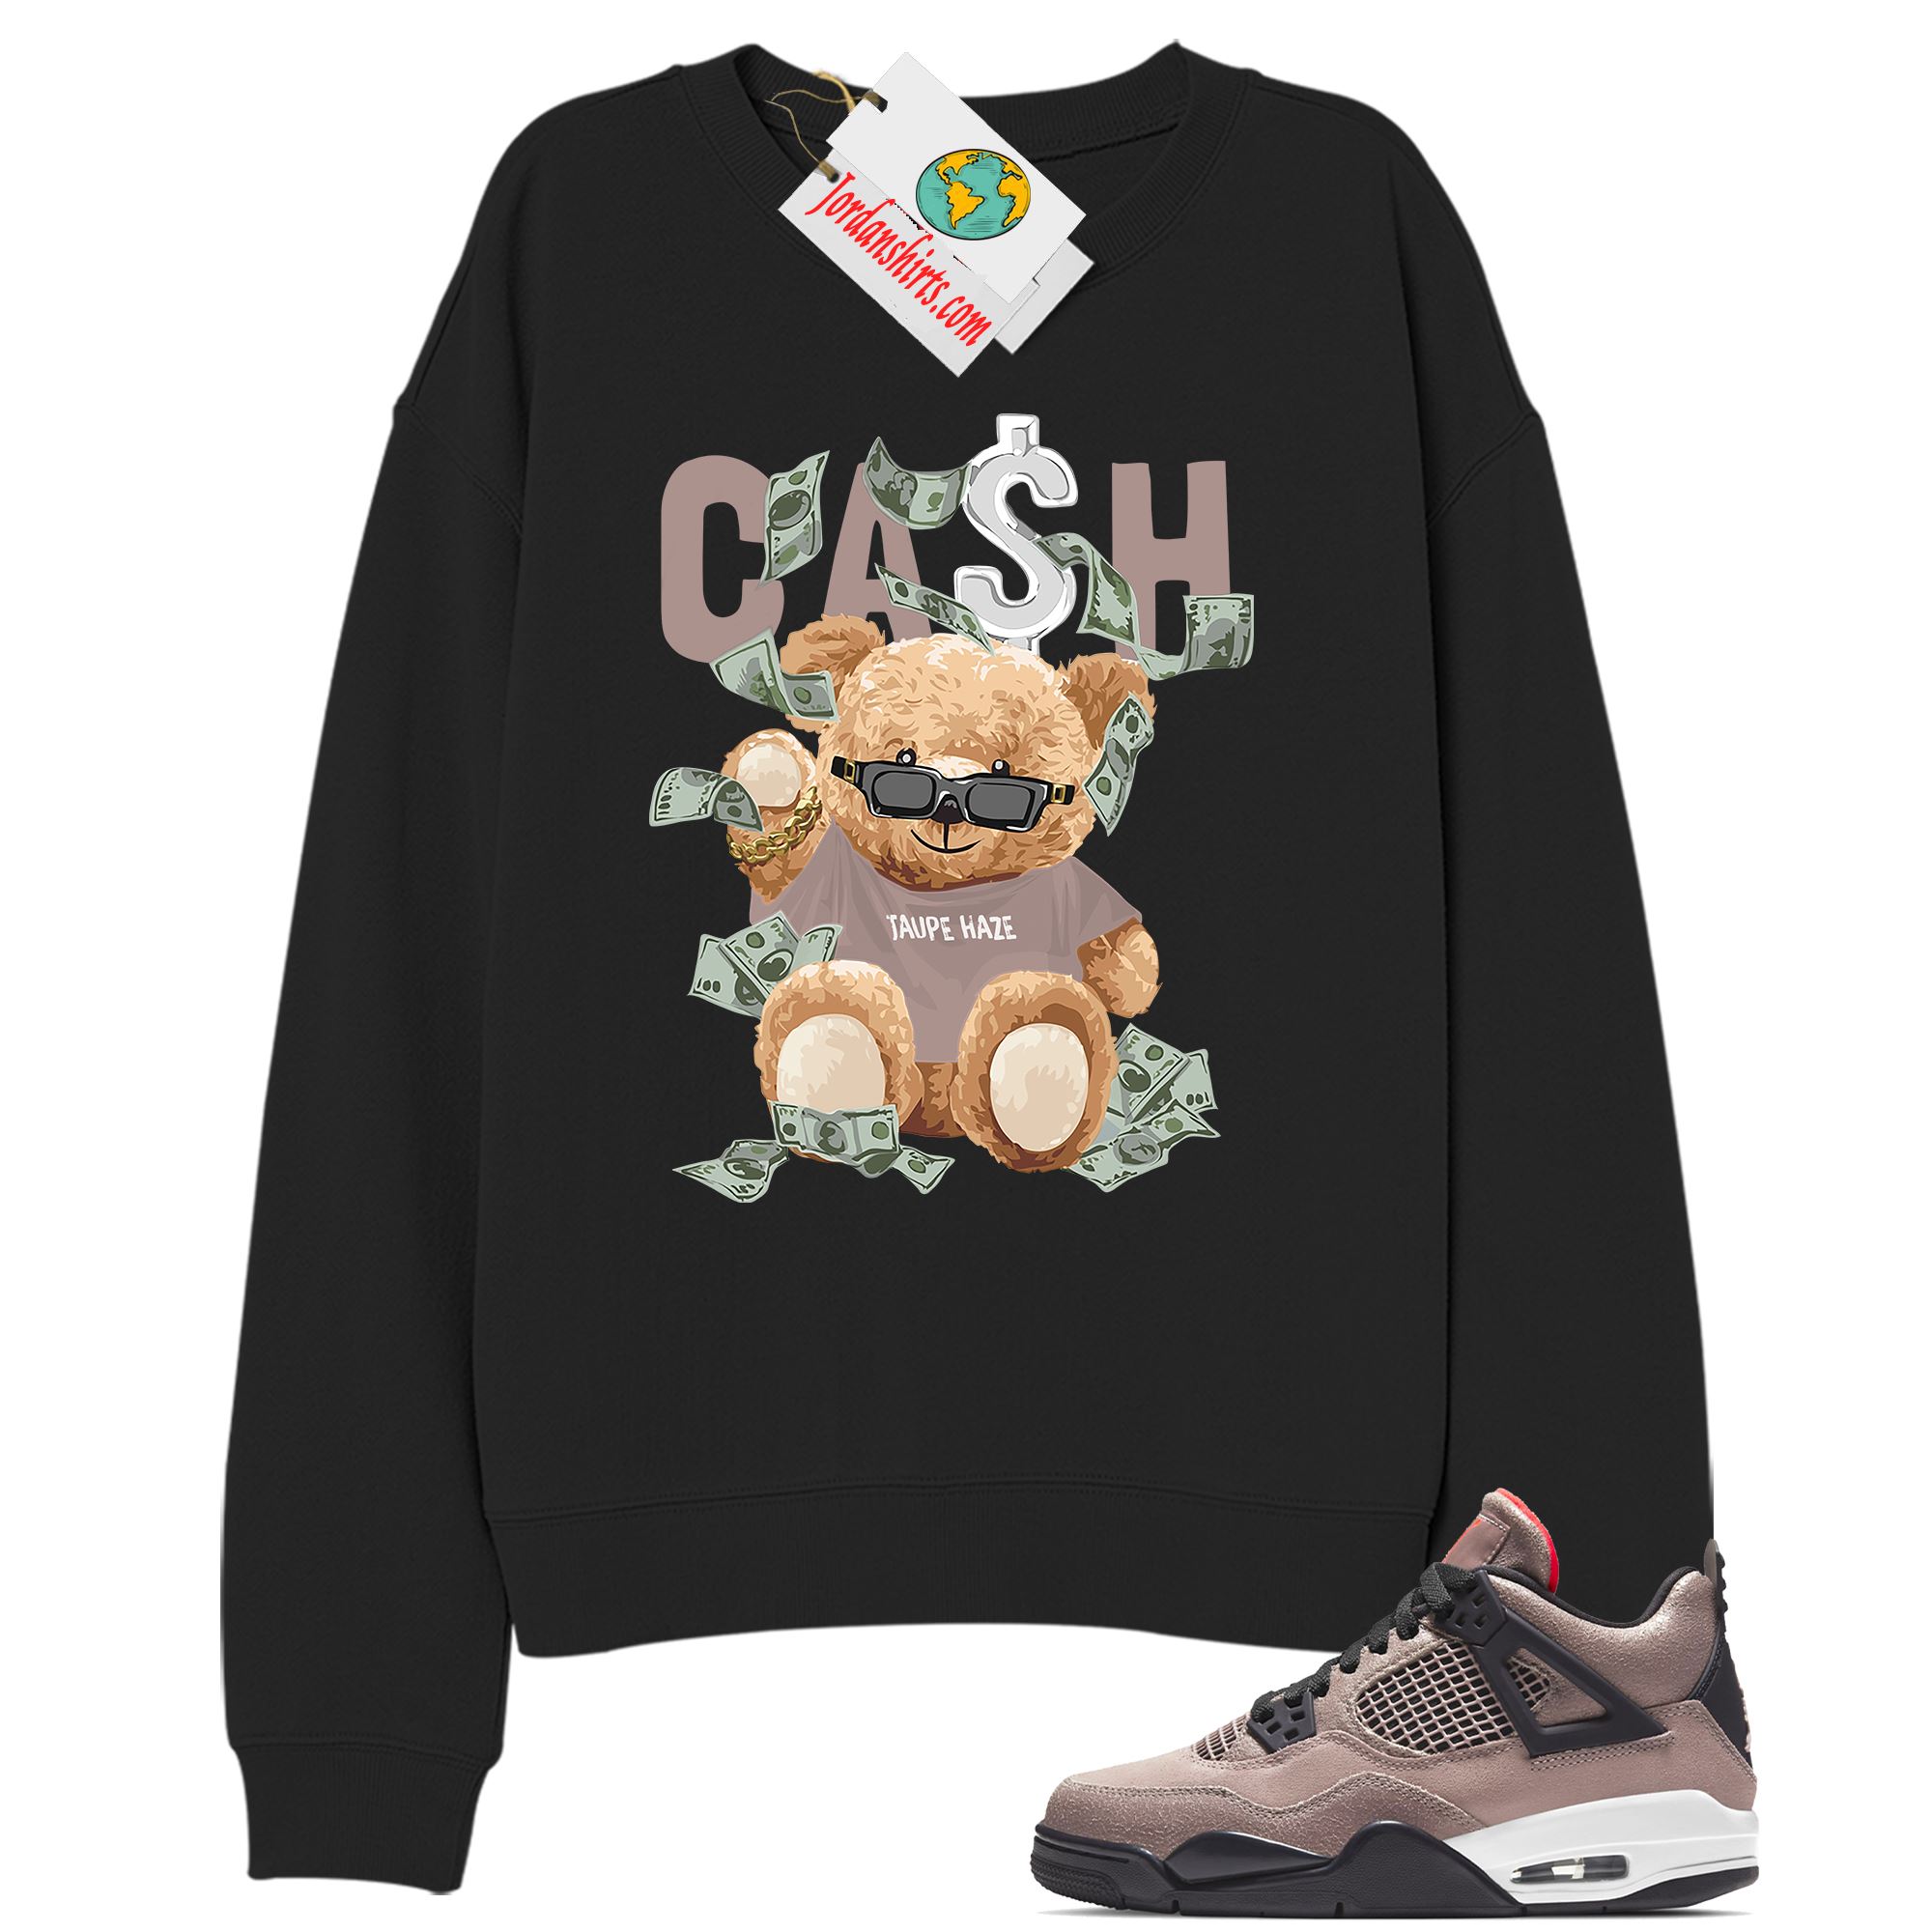 Jordan 4 Sweatshirt, Cash Teddy Bear In Sunglasses Black Sweatshirt Air Jordan 4 Taupe Haze 4s Plus Size Up To 5xl